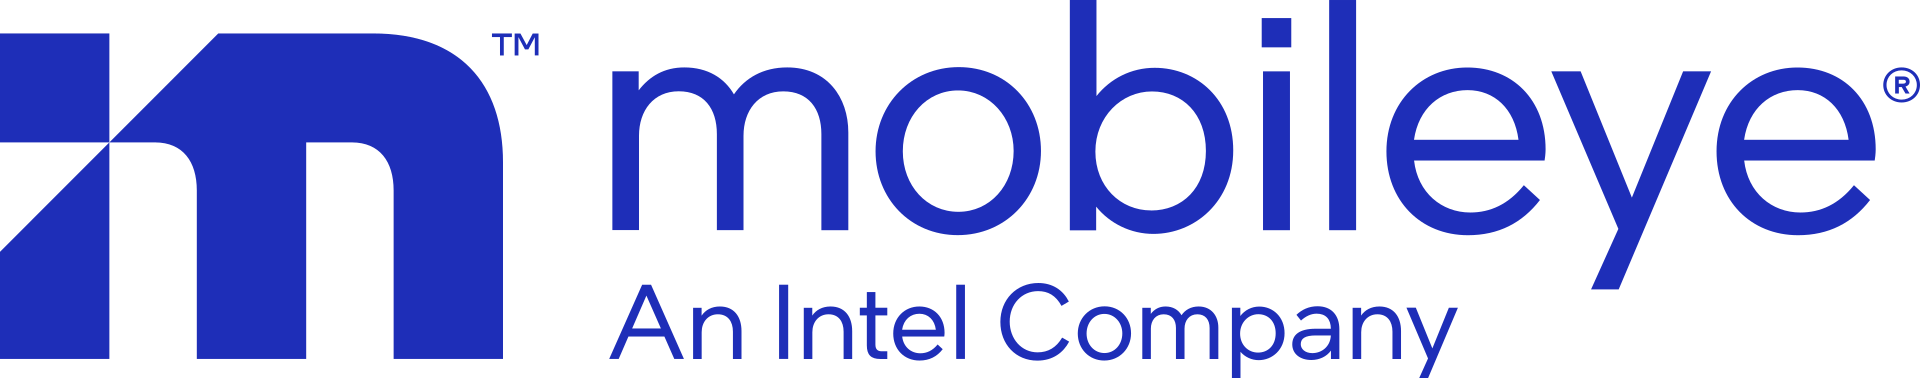 Intel - Mobileye - Mobileye Vision Technologies